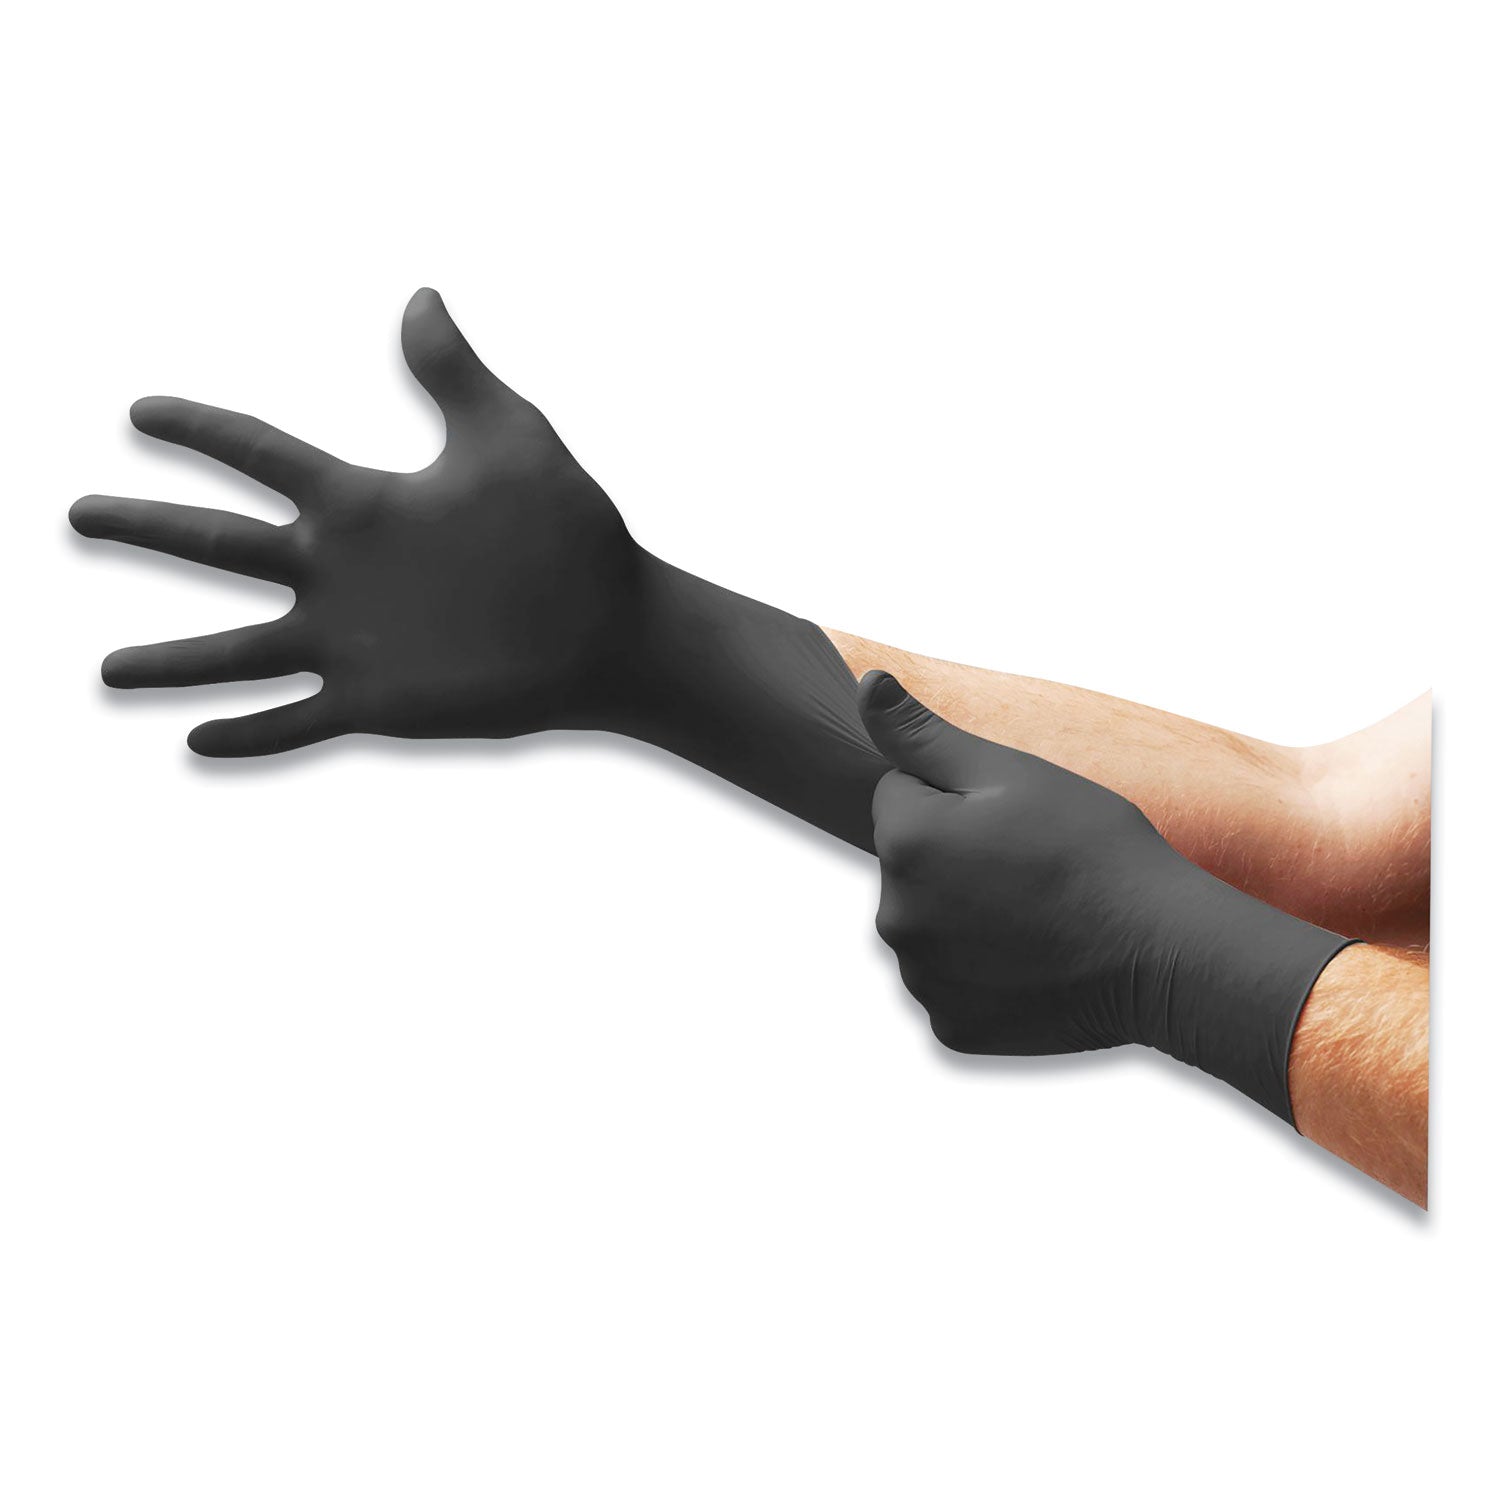 microflex-midknight-powder-free-nitrile-gloves-47-mil-palm-59-mil-fingers-2x-large-black-100-box_ansmk296xxl - 1